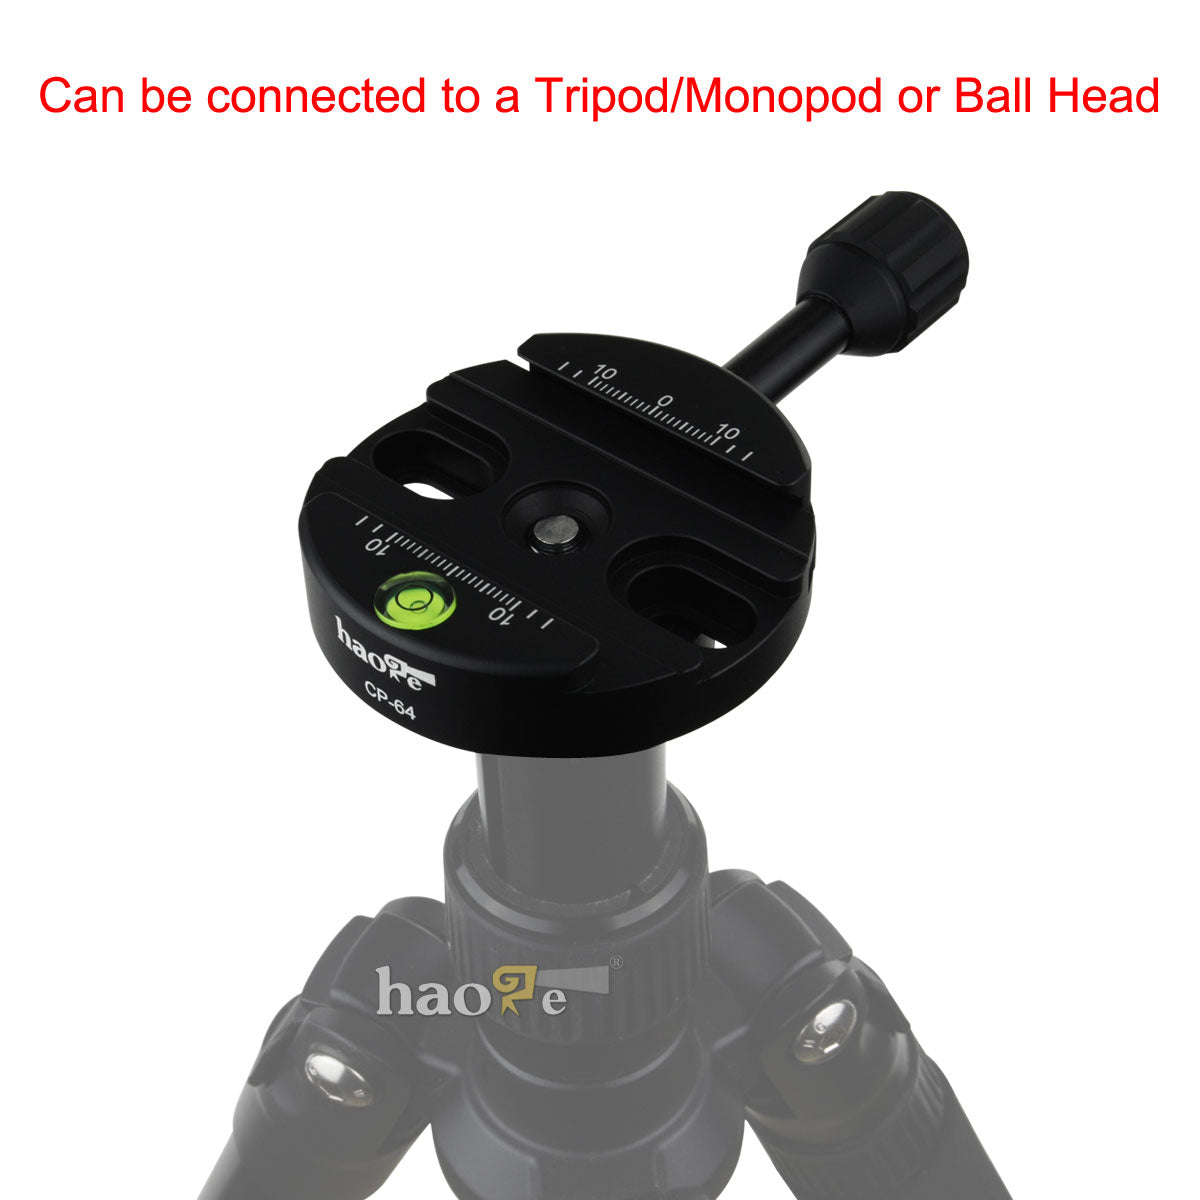 Haoge 64mm Screw Knob Clamp Adapter Mount for Quick Release QR Plate Camera Tripod Ballhead Monopod Ball Head Fit Arca Swiss